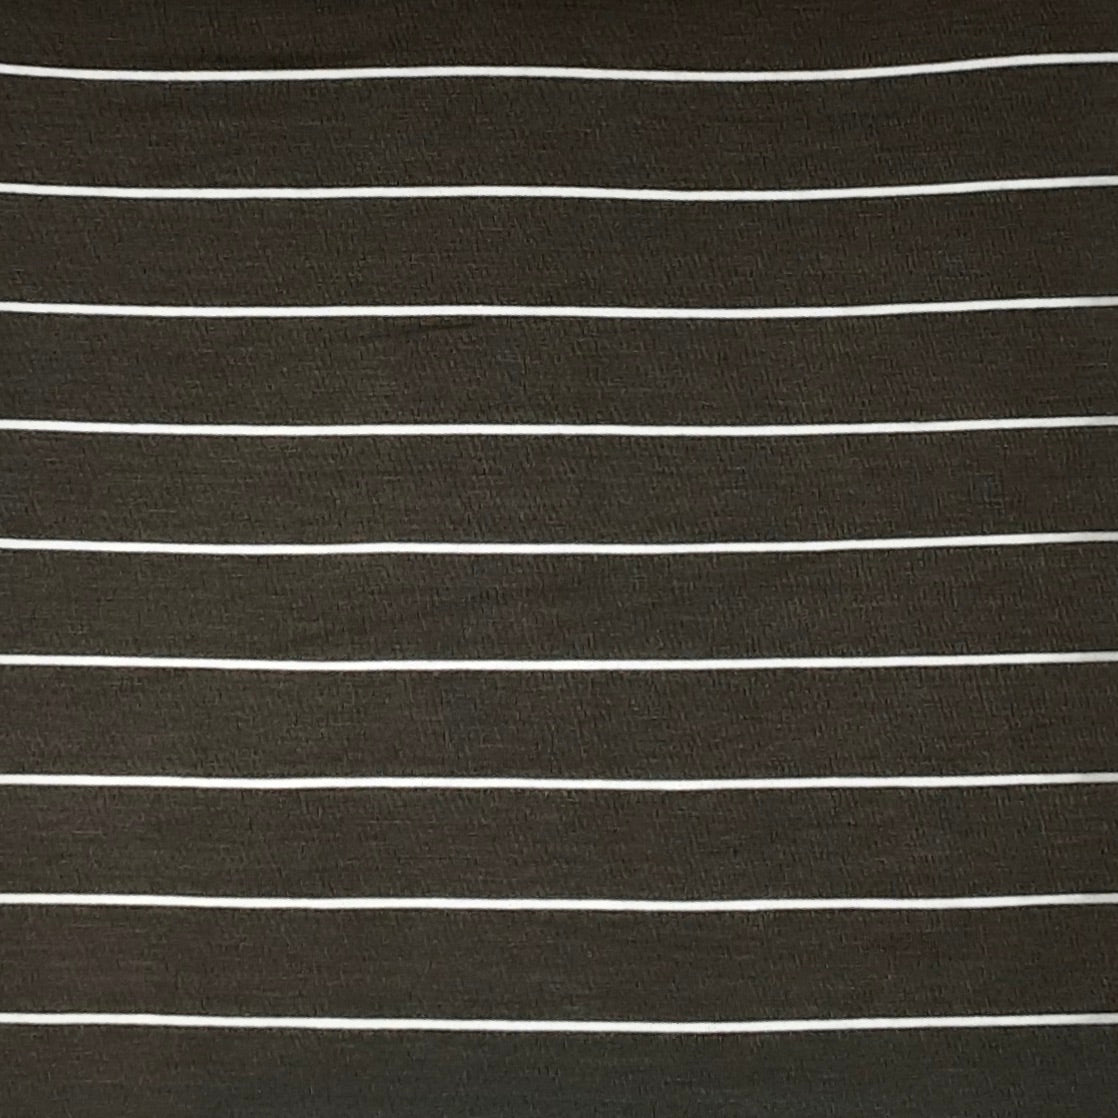 Olive/White Stripes Jersey Rayon Spandex